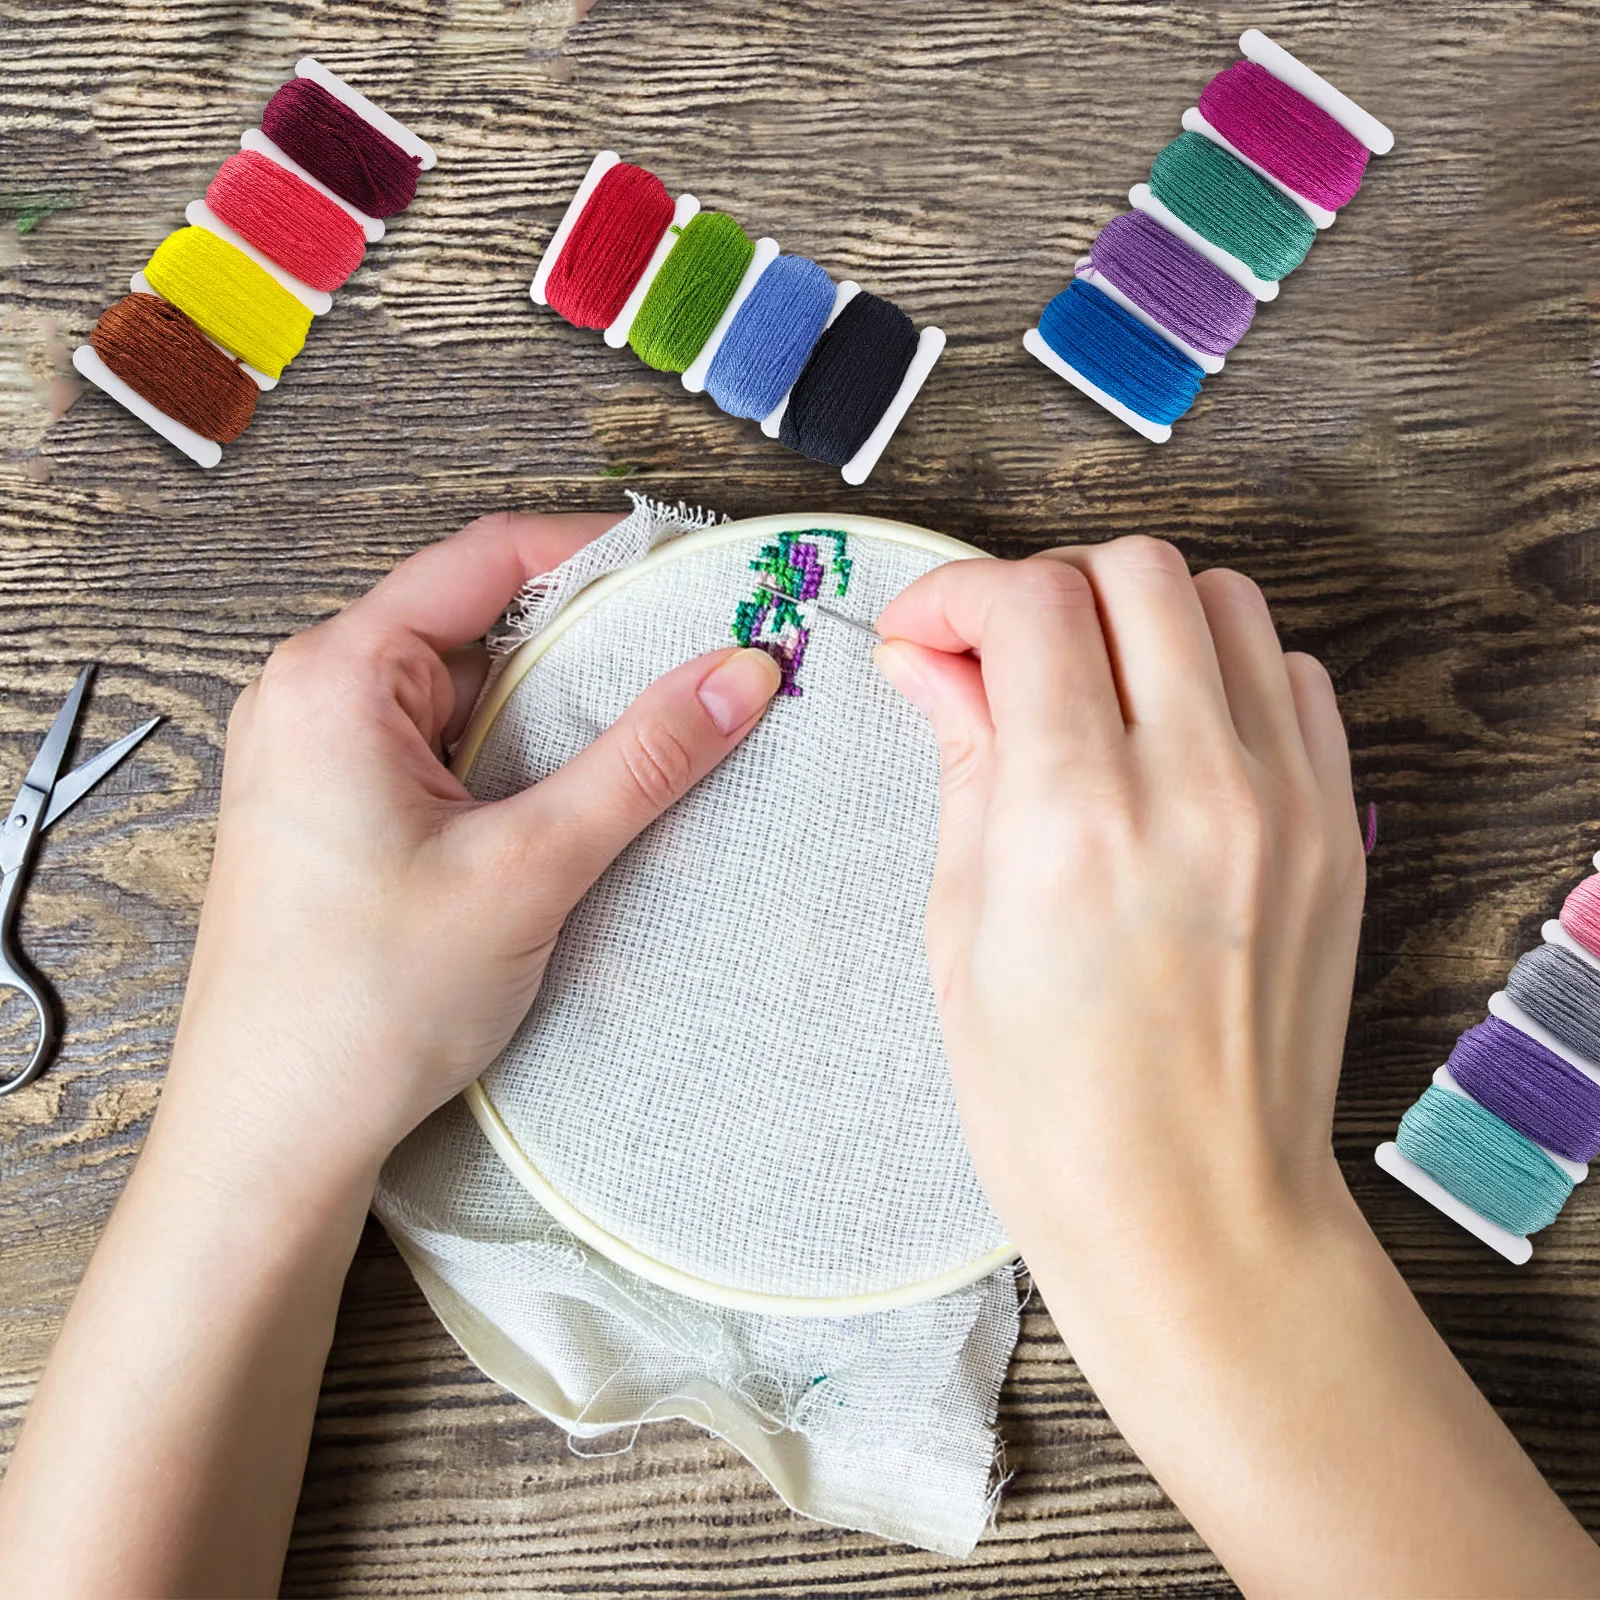 Embroidery Floss bobbins - 32 colors Cross Stitch Threads - Friendship Bracelets Floss - Crafts Floss - 8 Bobbins Per Pac